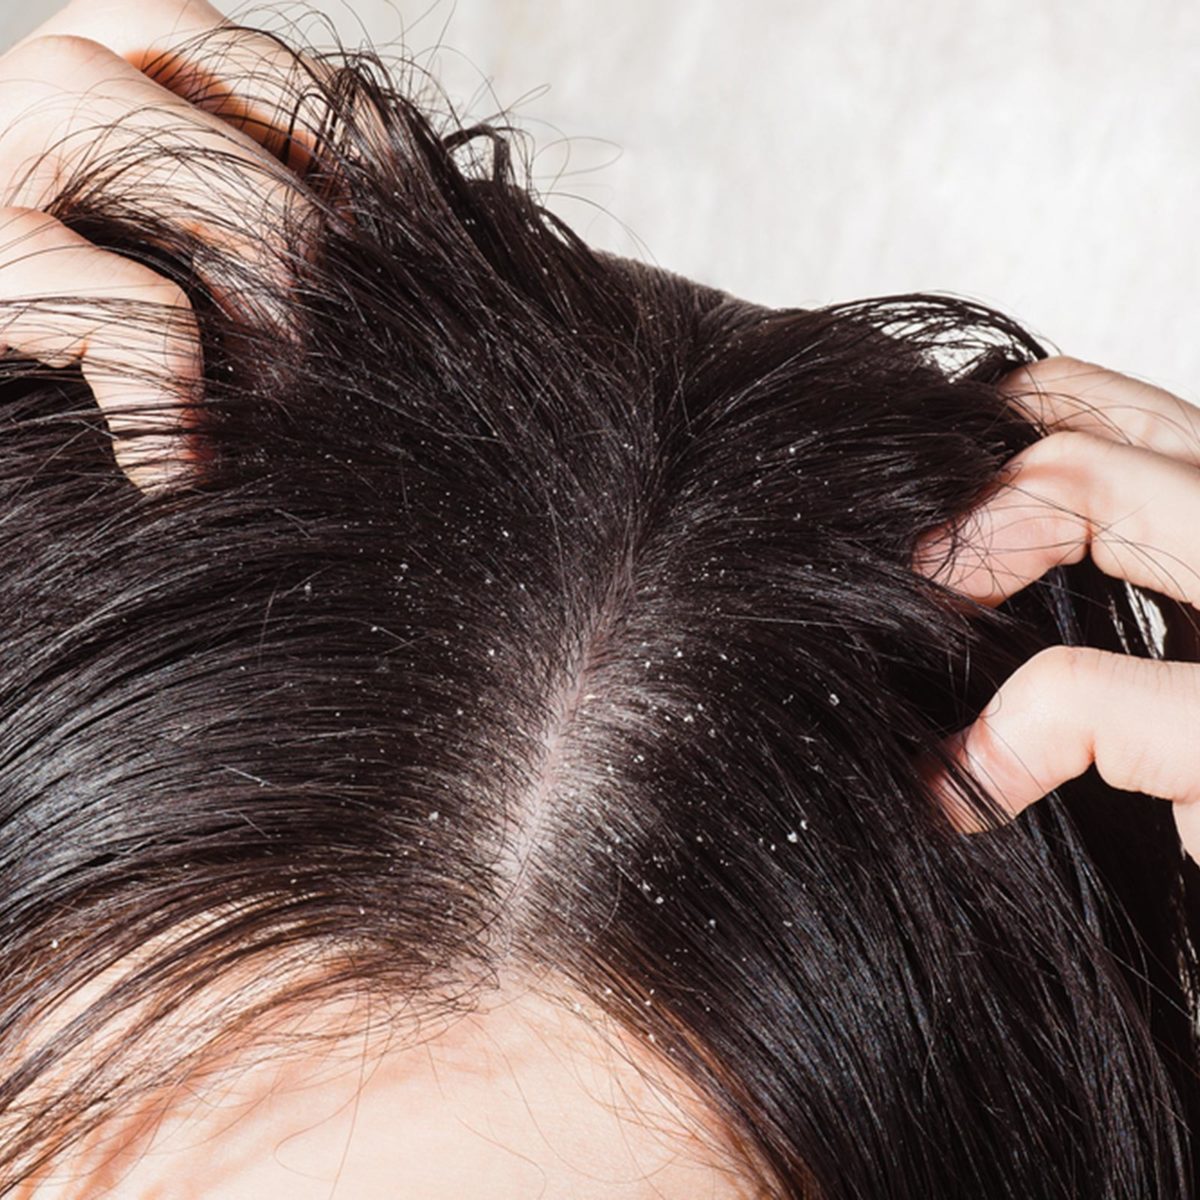 Greasy Hair Surprising Causes Behind Oily Locks Reader S